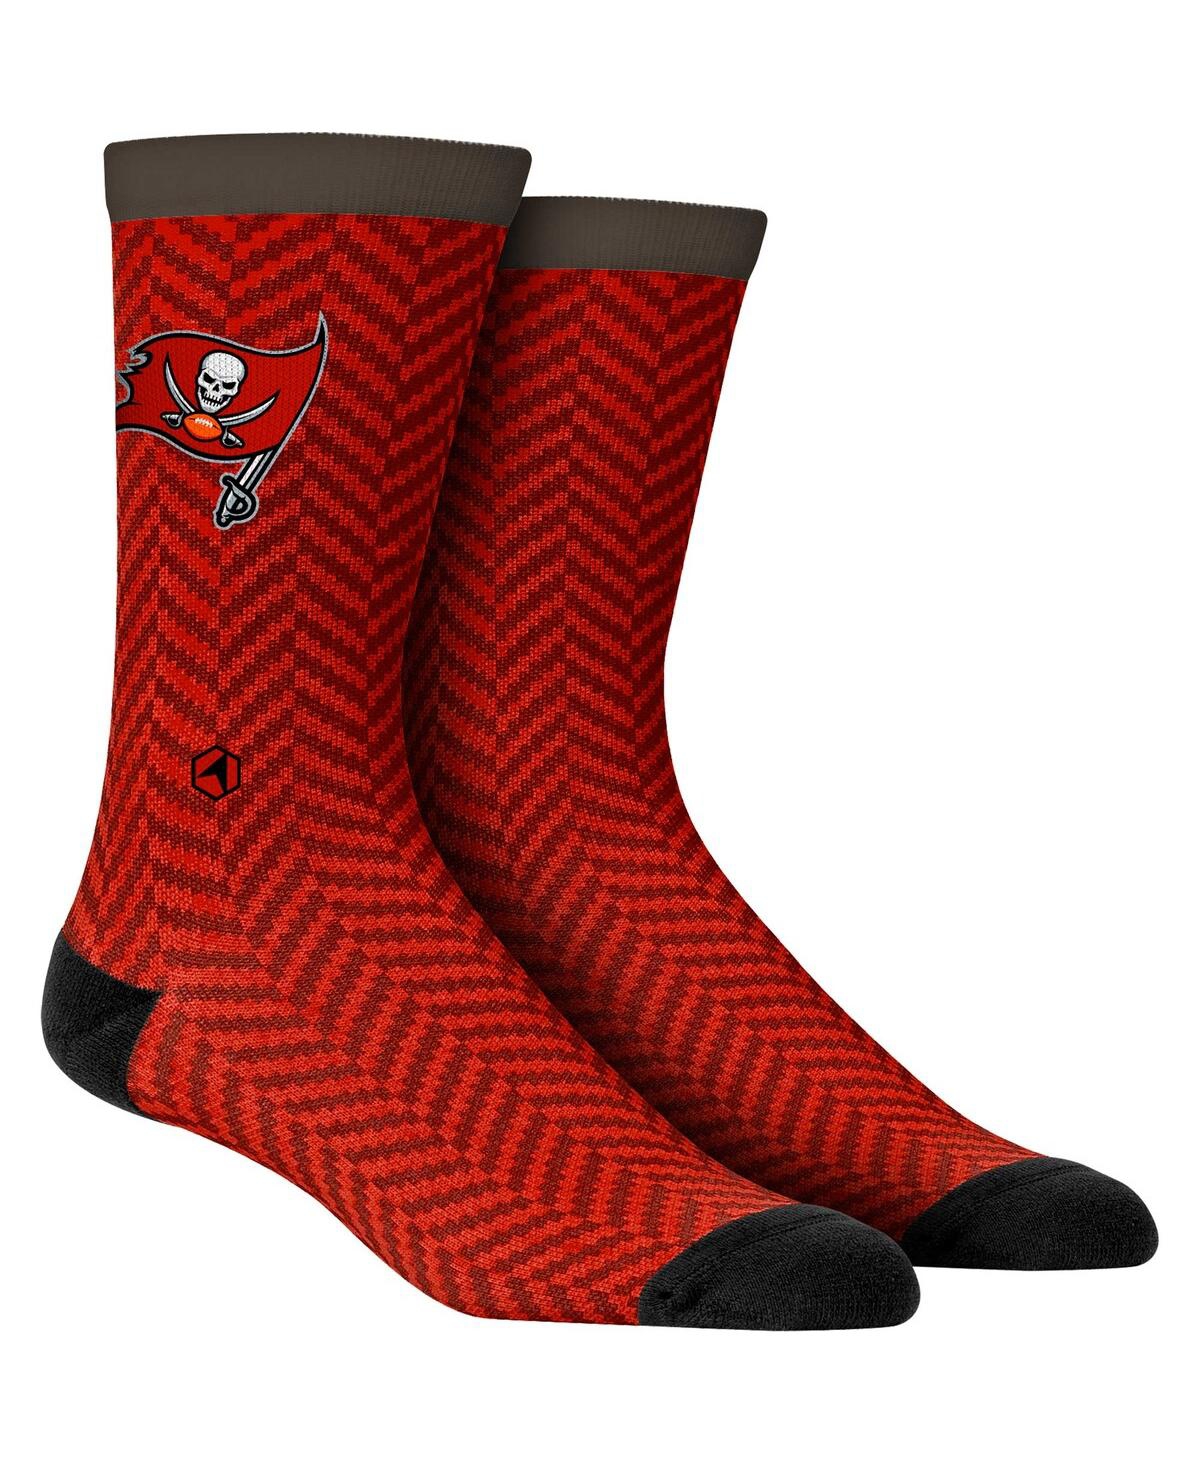 Men's Rock 'Em Socks Tampa Bay Buccaneers Herringbone Dress Socks - Multi